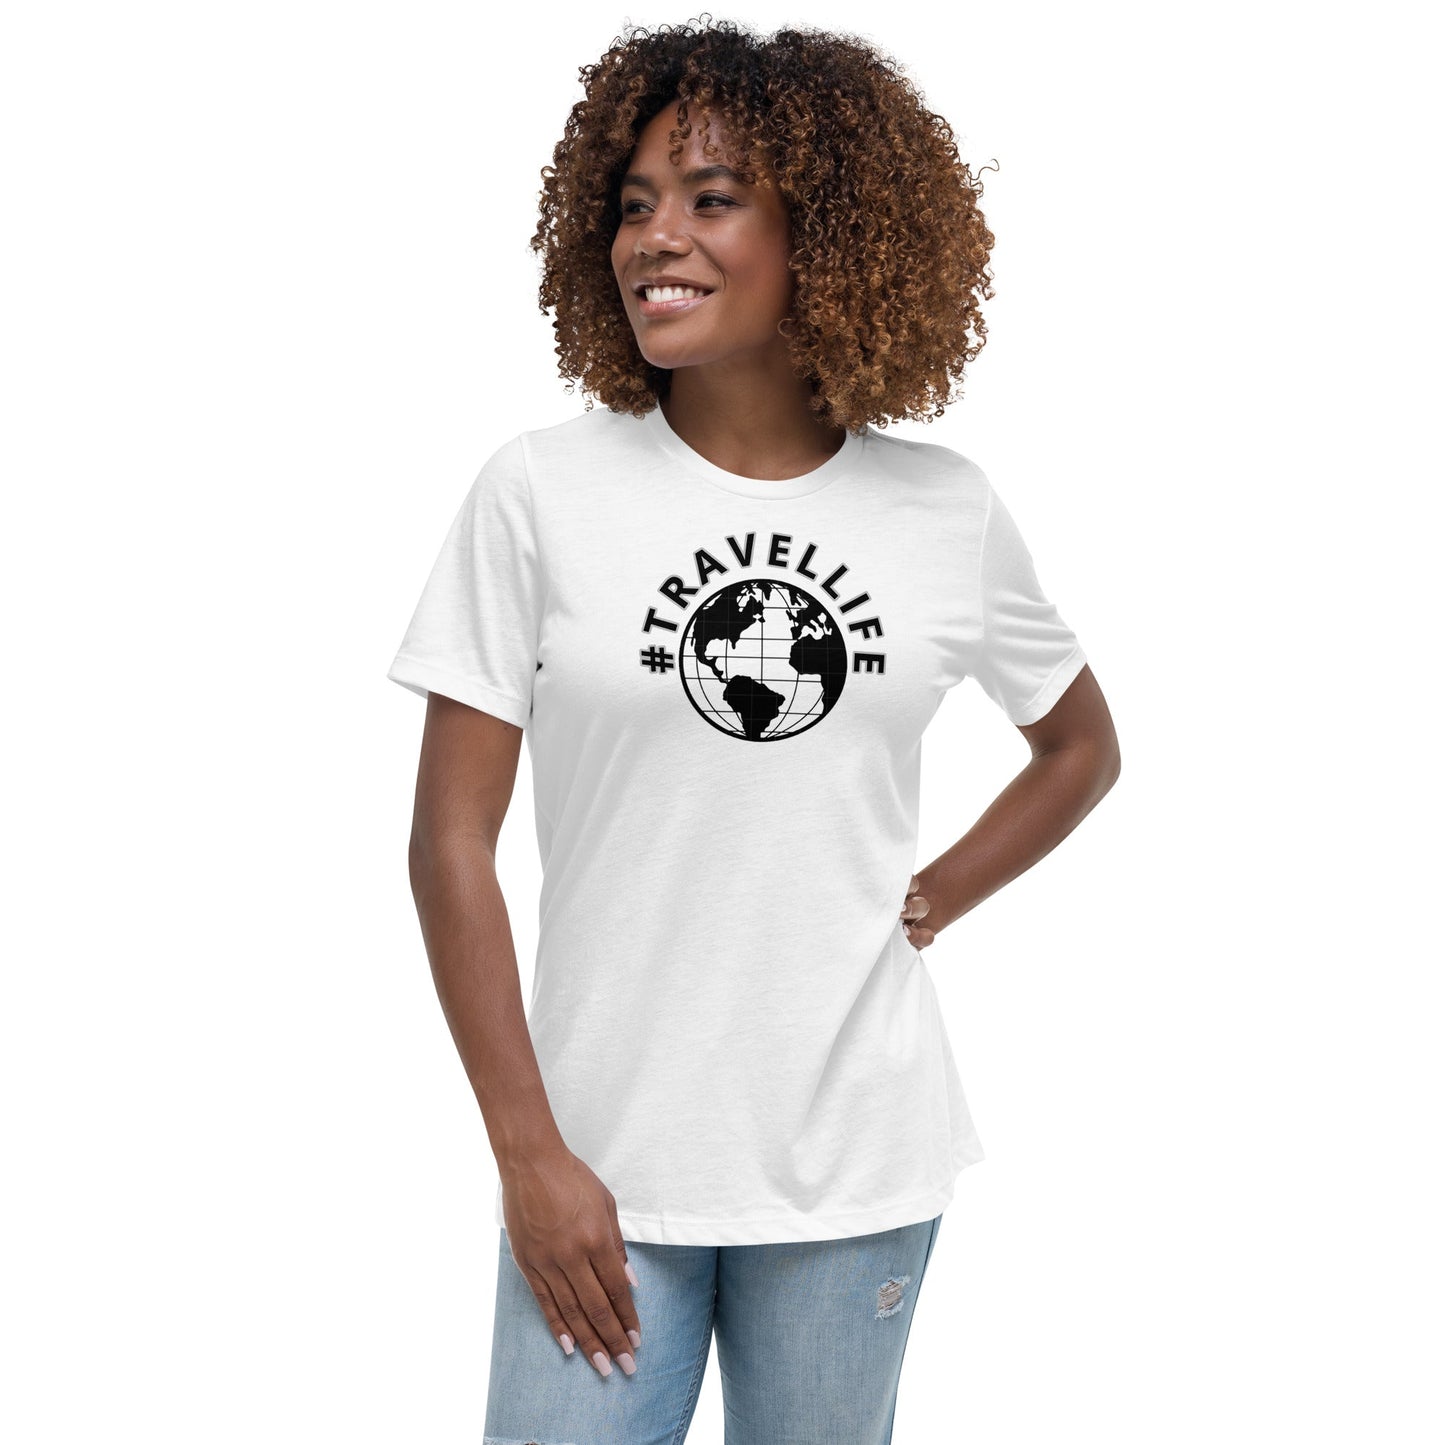 #Travellife World Women's White Relaxed T-Shirt Black Text 2X+